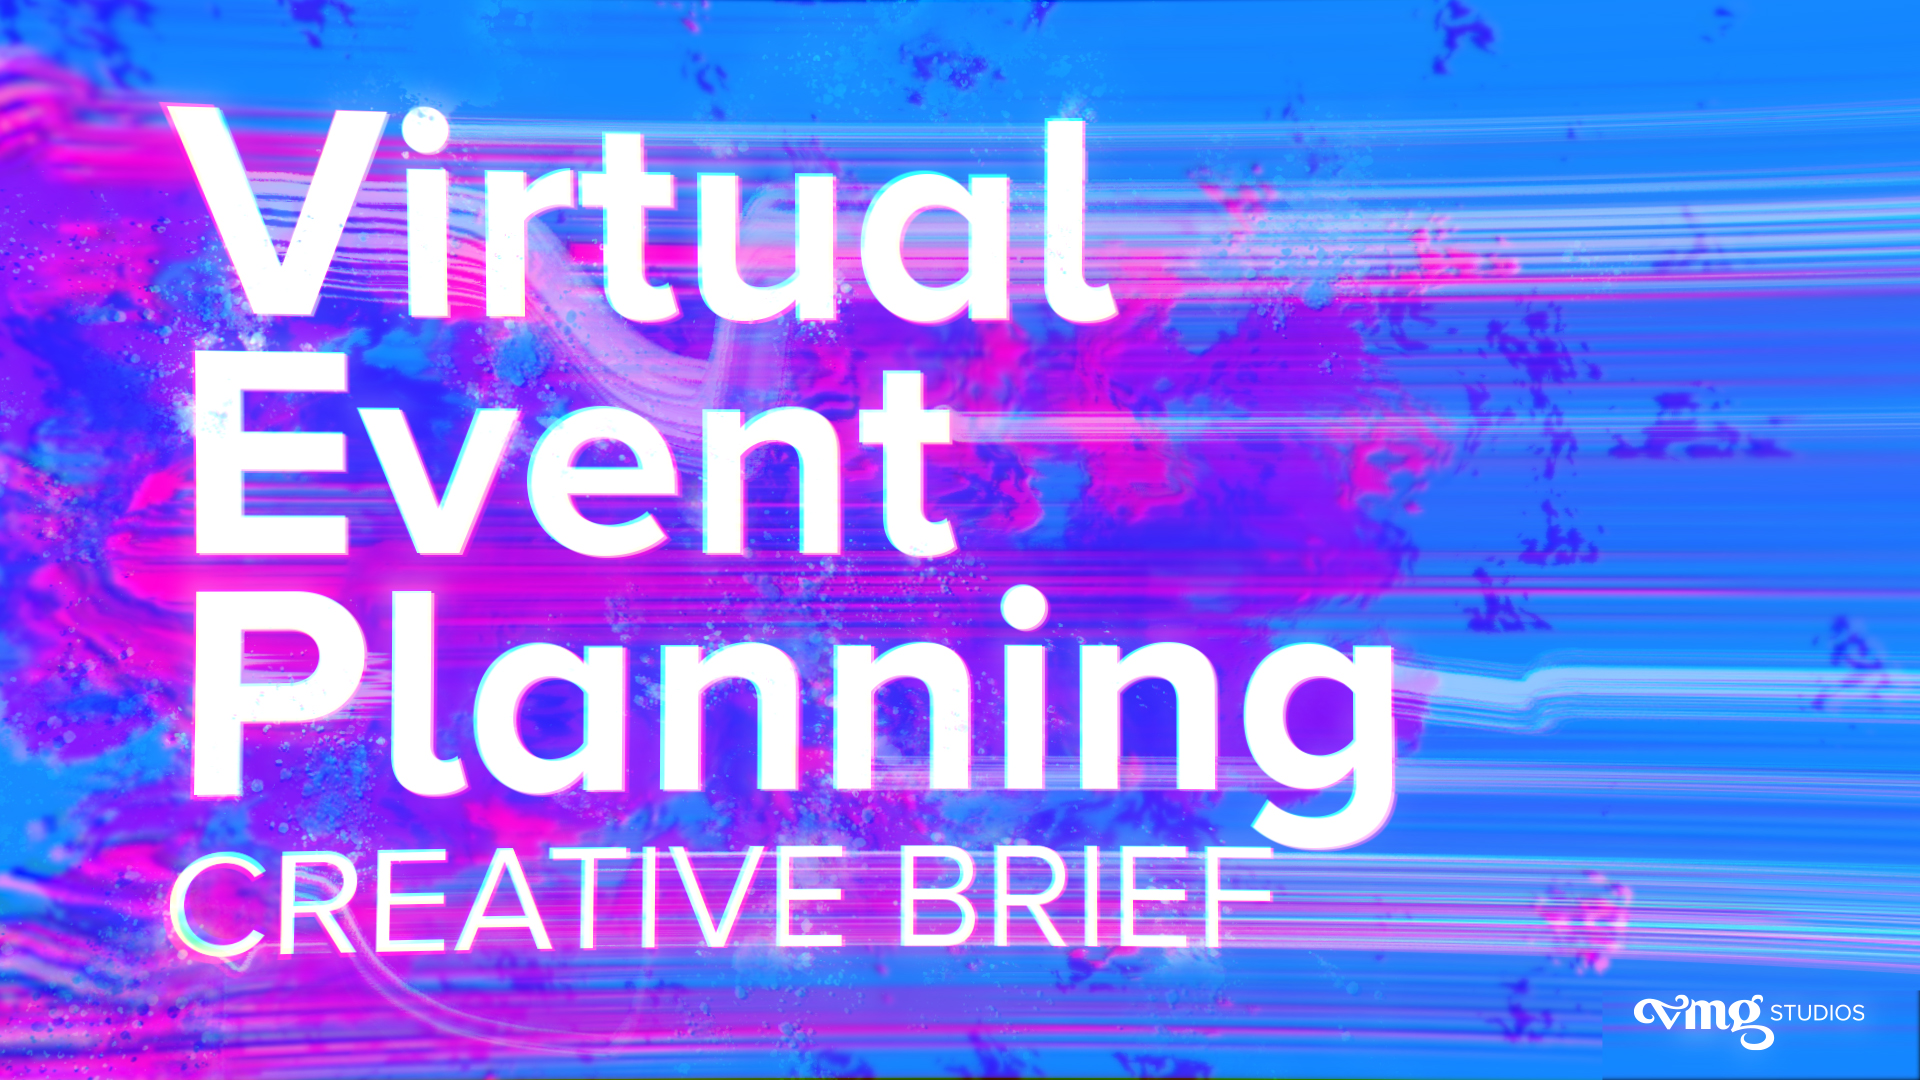 Virtual event planning creative brief